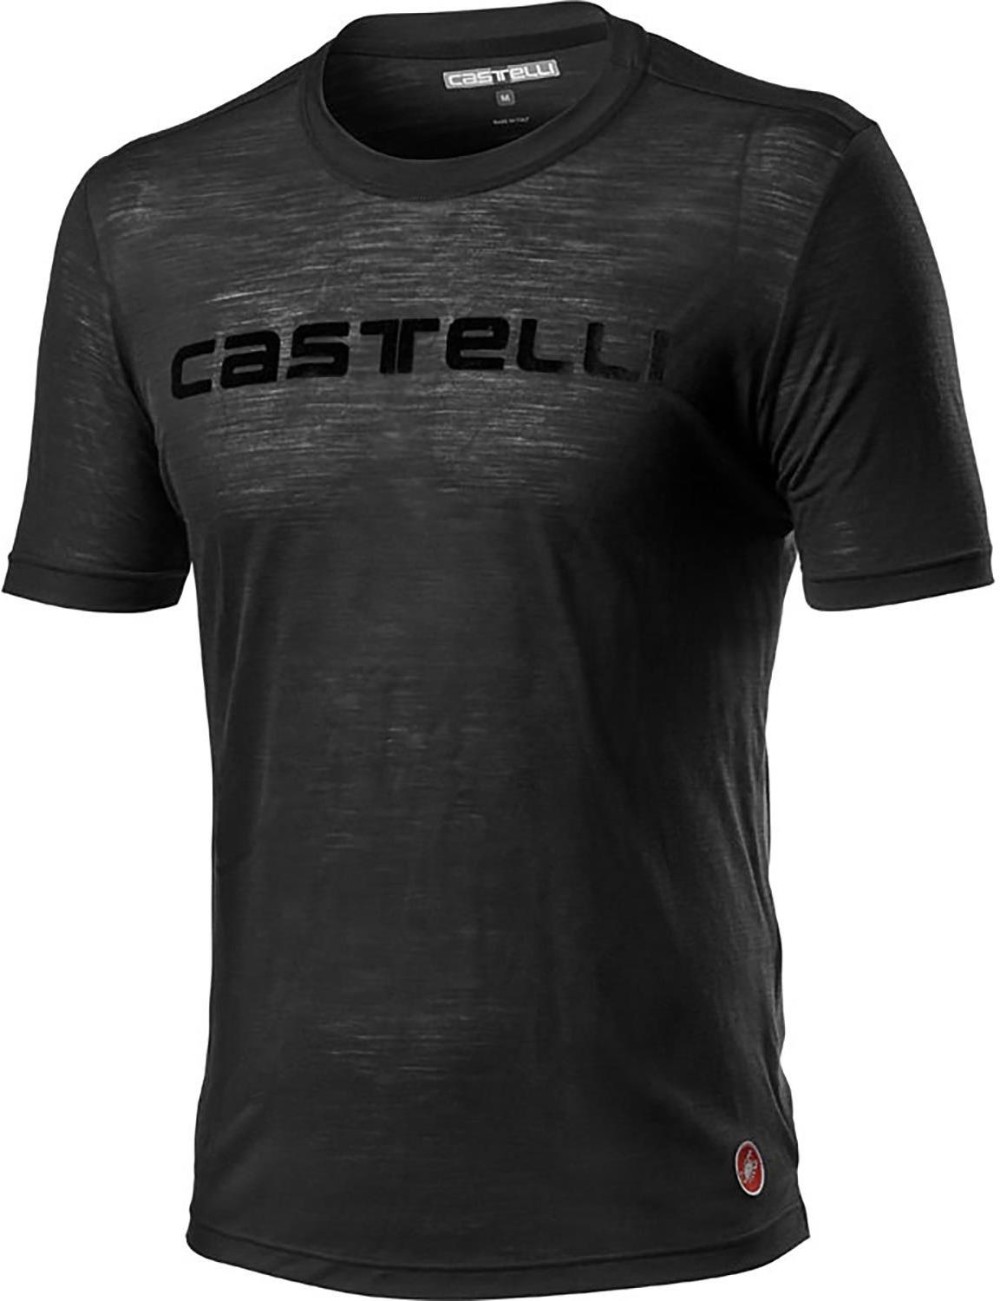 Castelli Short Sleeve Tee image 0